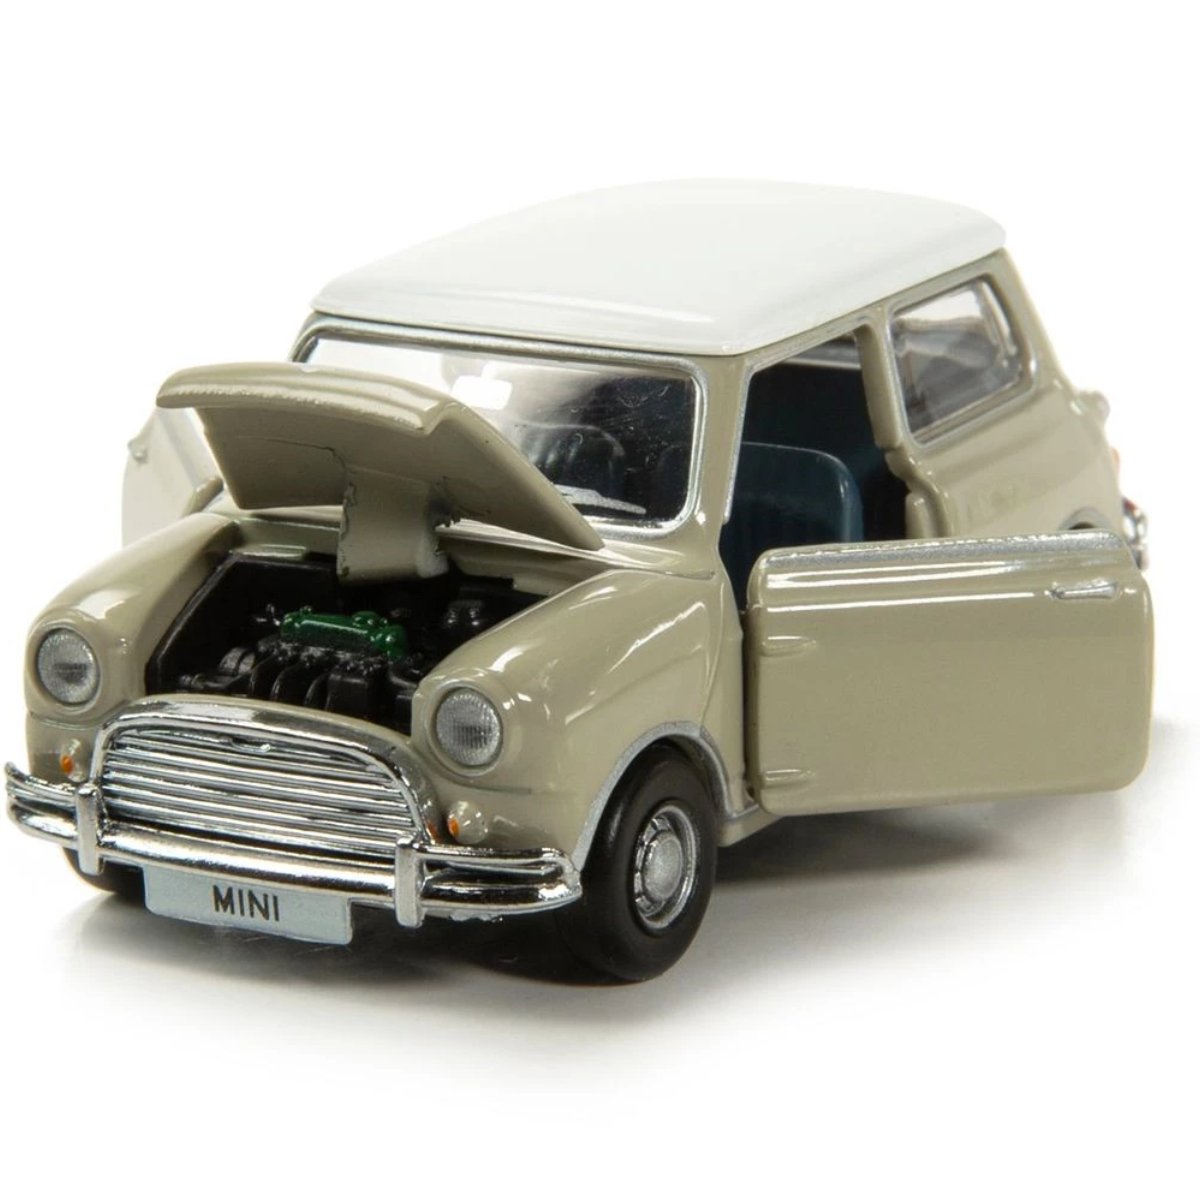 Tiny Models Mini Cooper MK1 402C (1:50 Scale) - Phillips Hobbies